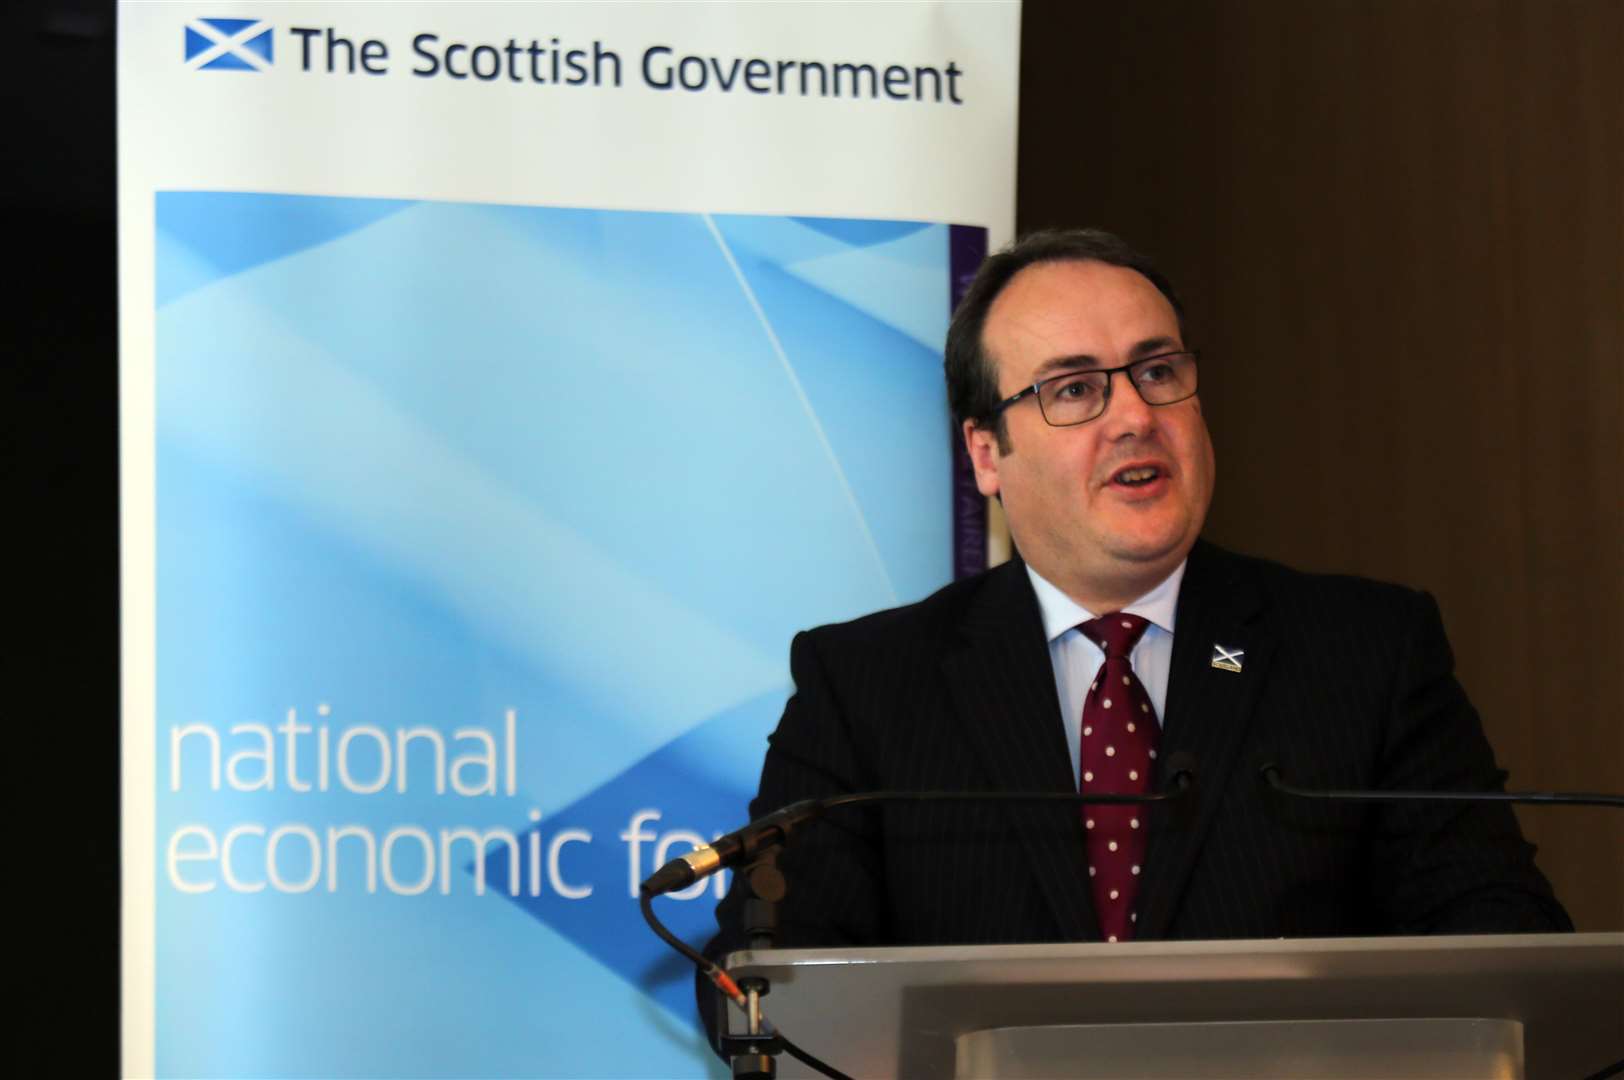 Scotland's connectivity minister Paul Wheelhouse recently announced the Scottish Broadband Voucher Scheme.